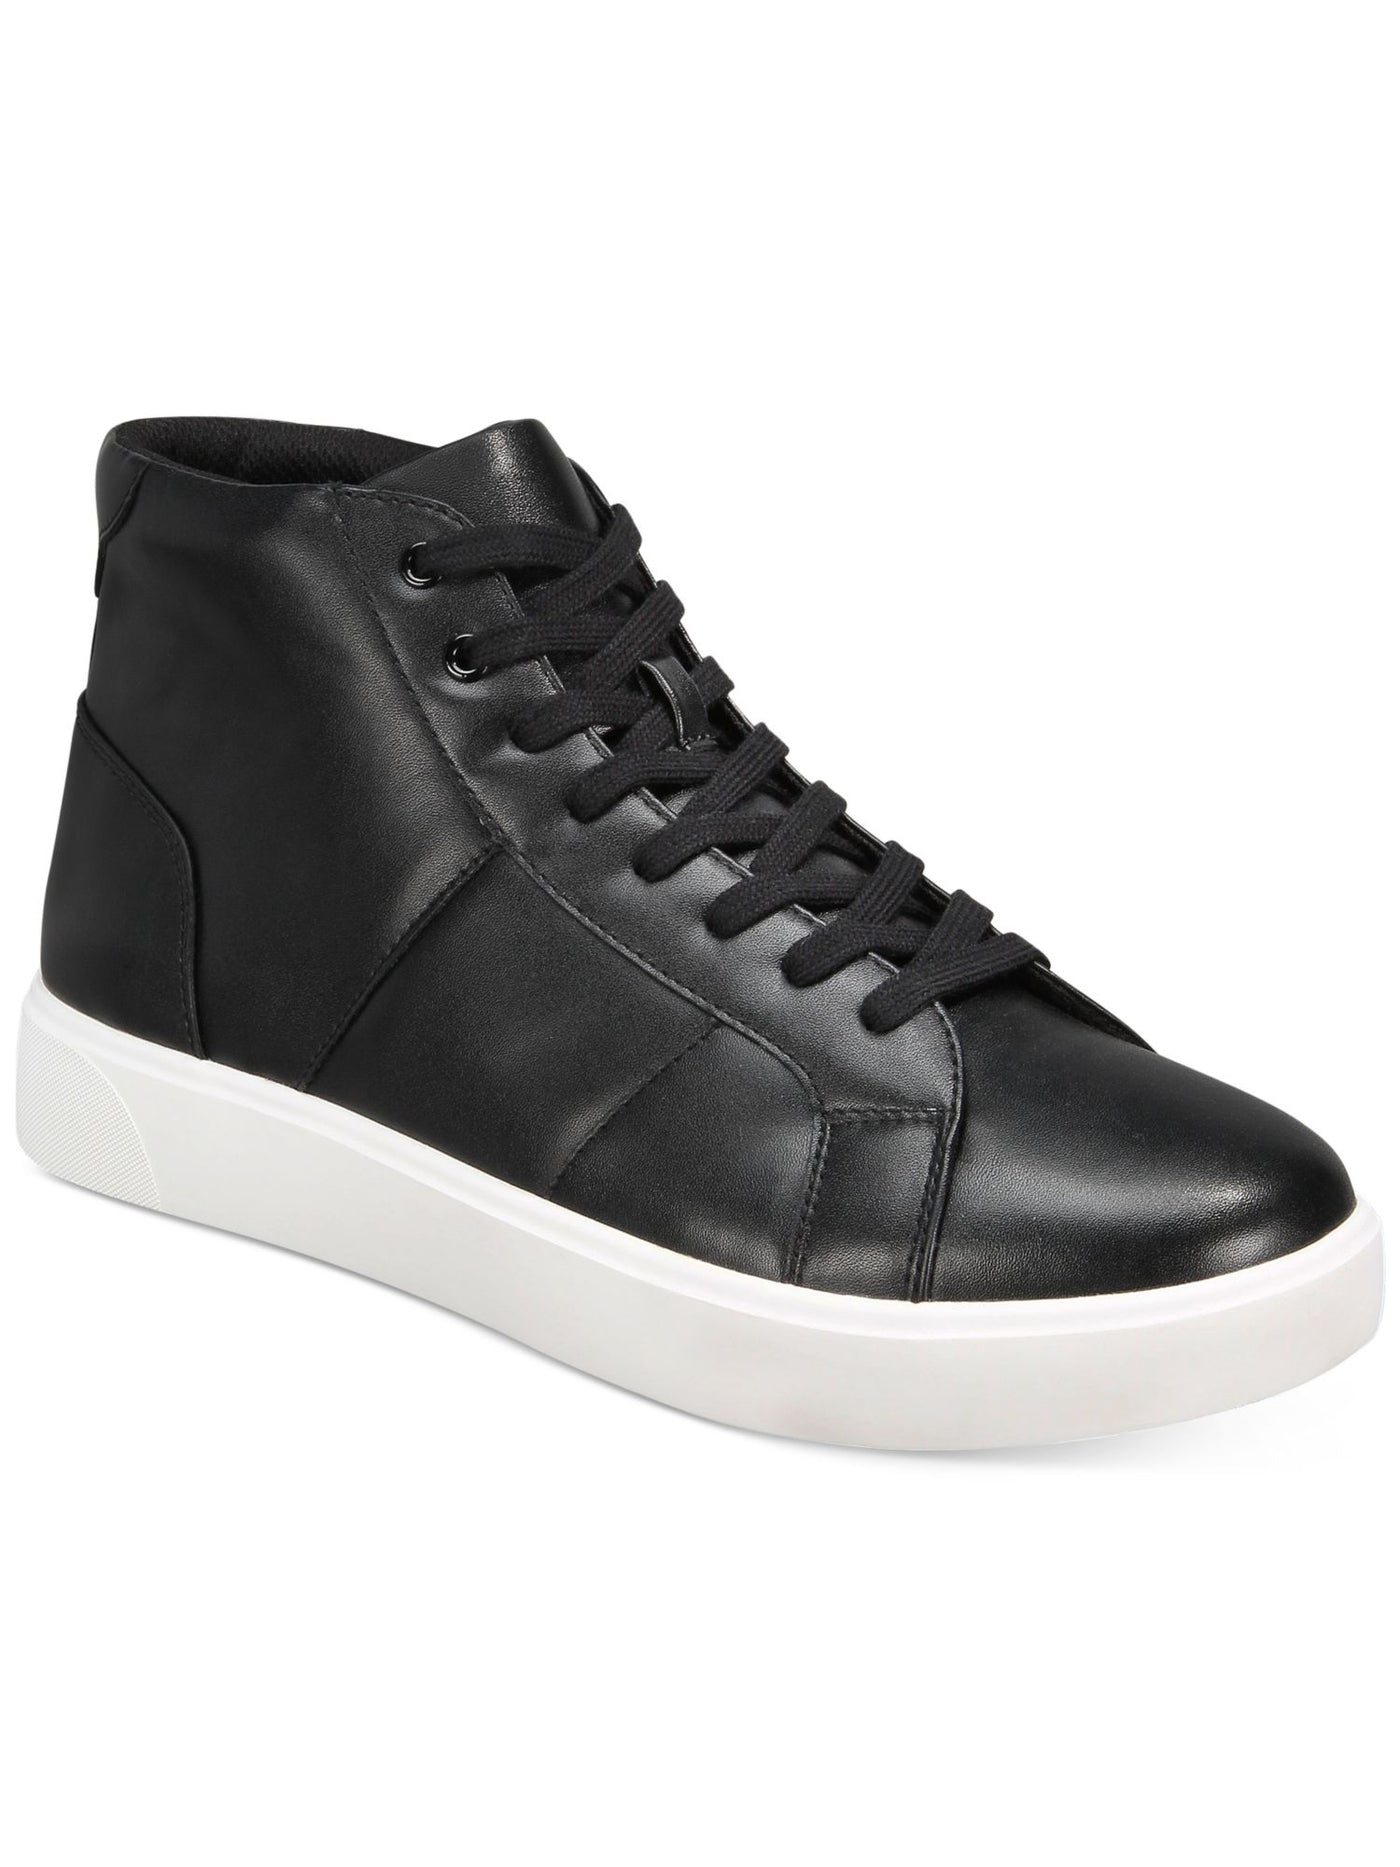 INC Mens Black Comfort Rhett Round Toe Platform Lace-Up Athletic Sneakers Shoes 12 M